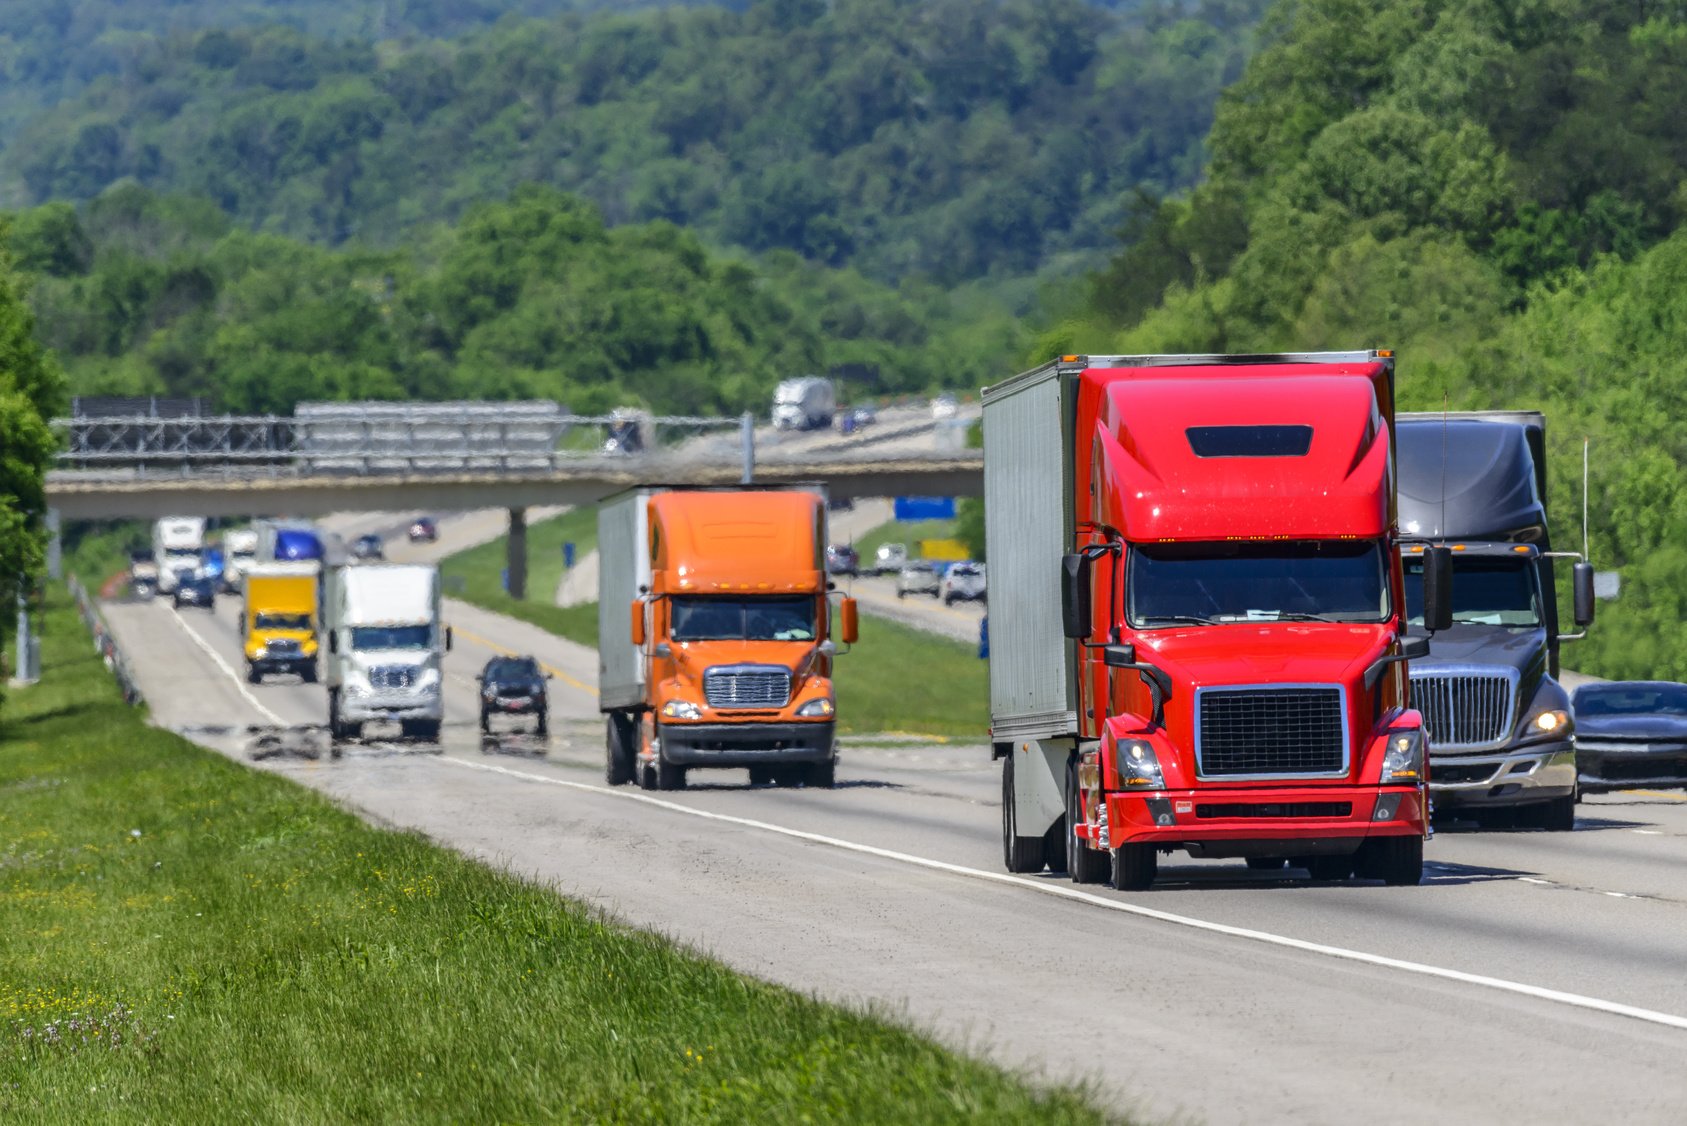 Series of semi trucks driving down the highway using green diesel fuels